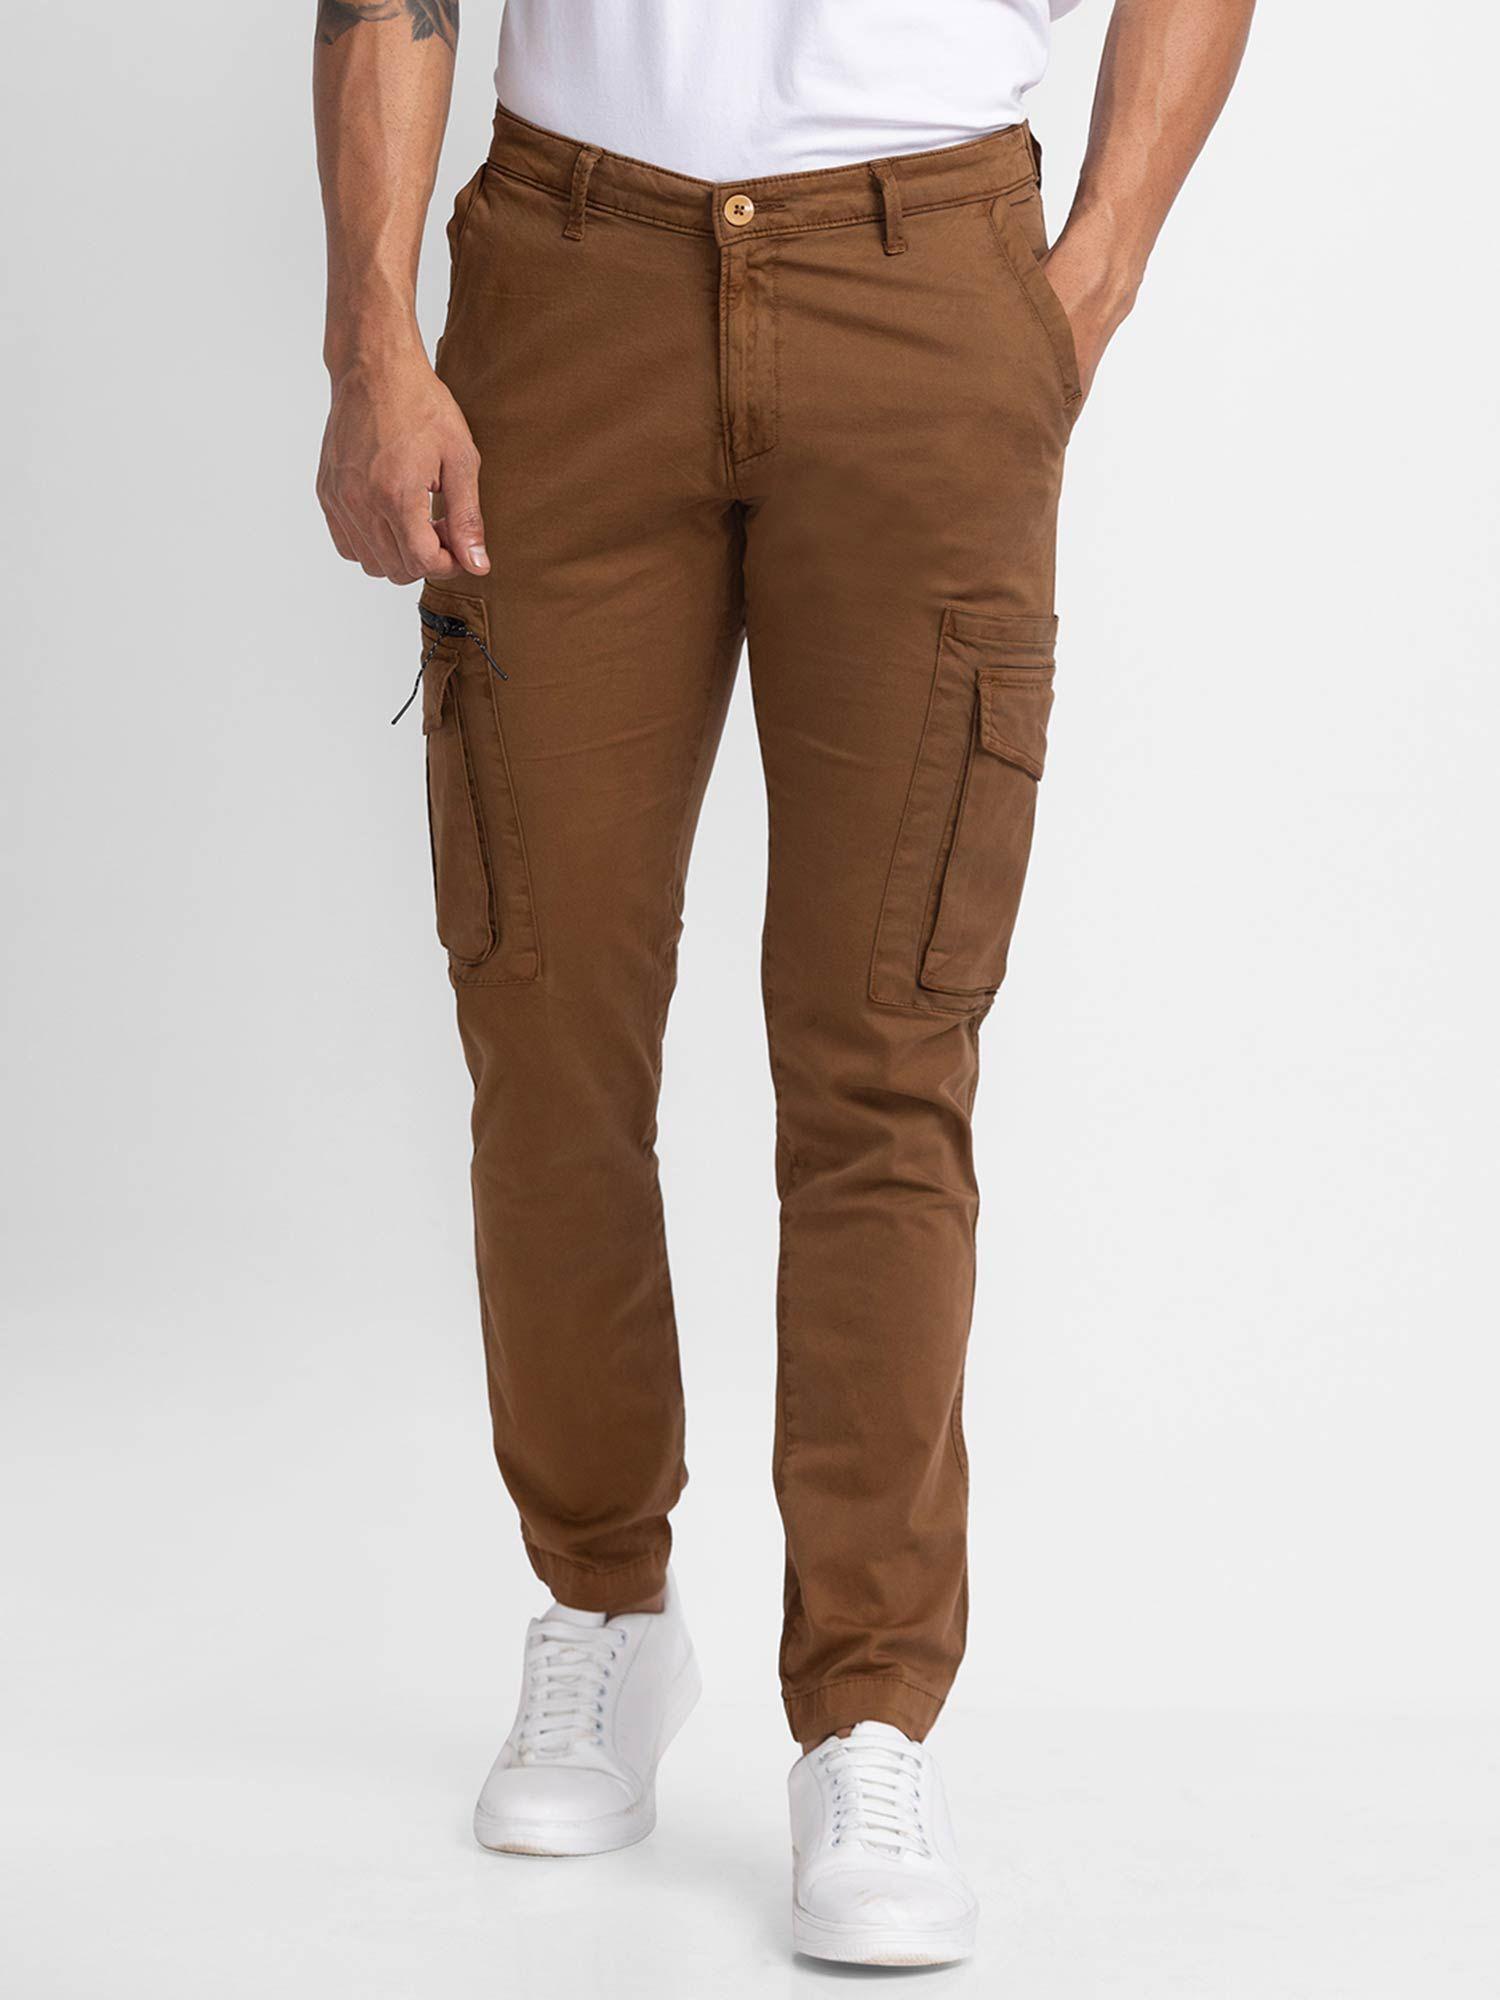 mud brown cotton slim fit regular length trousers for men